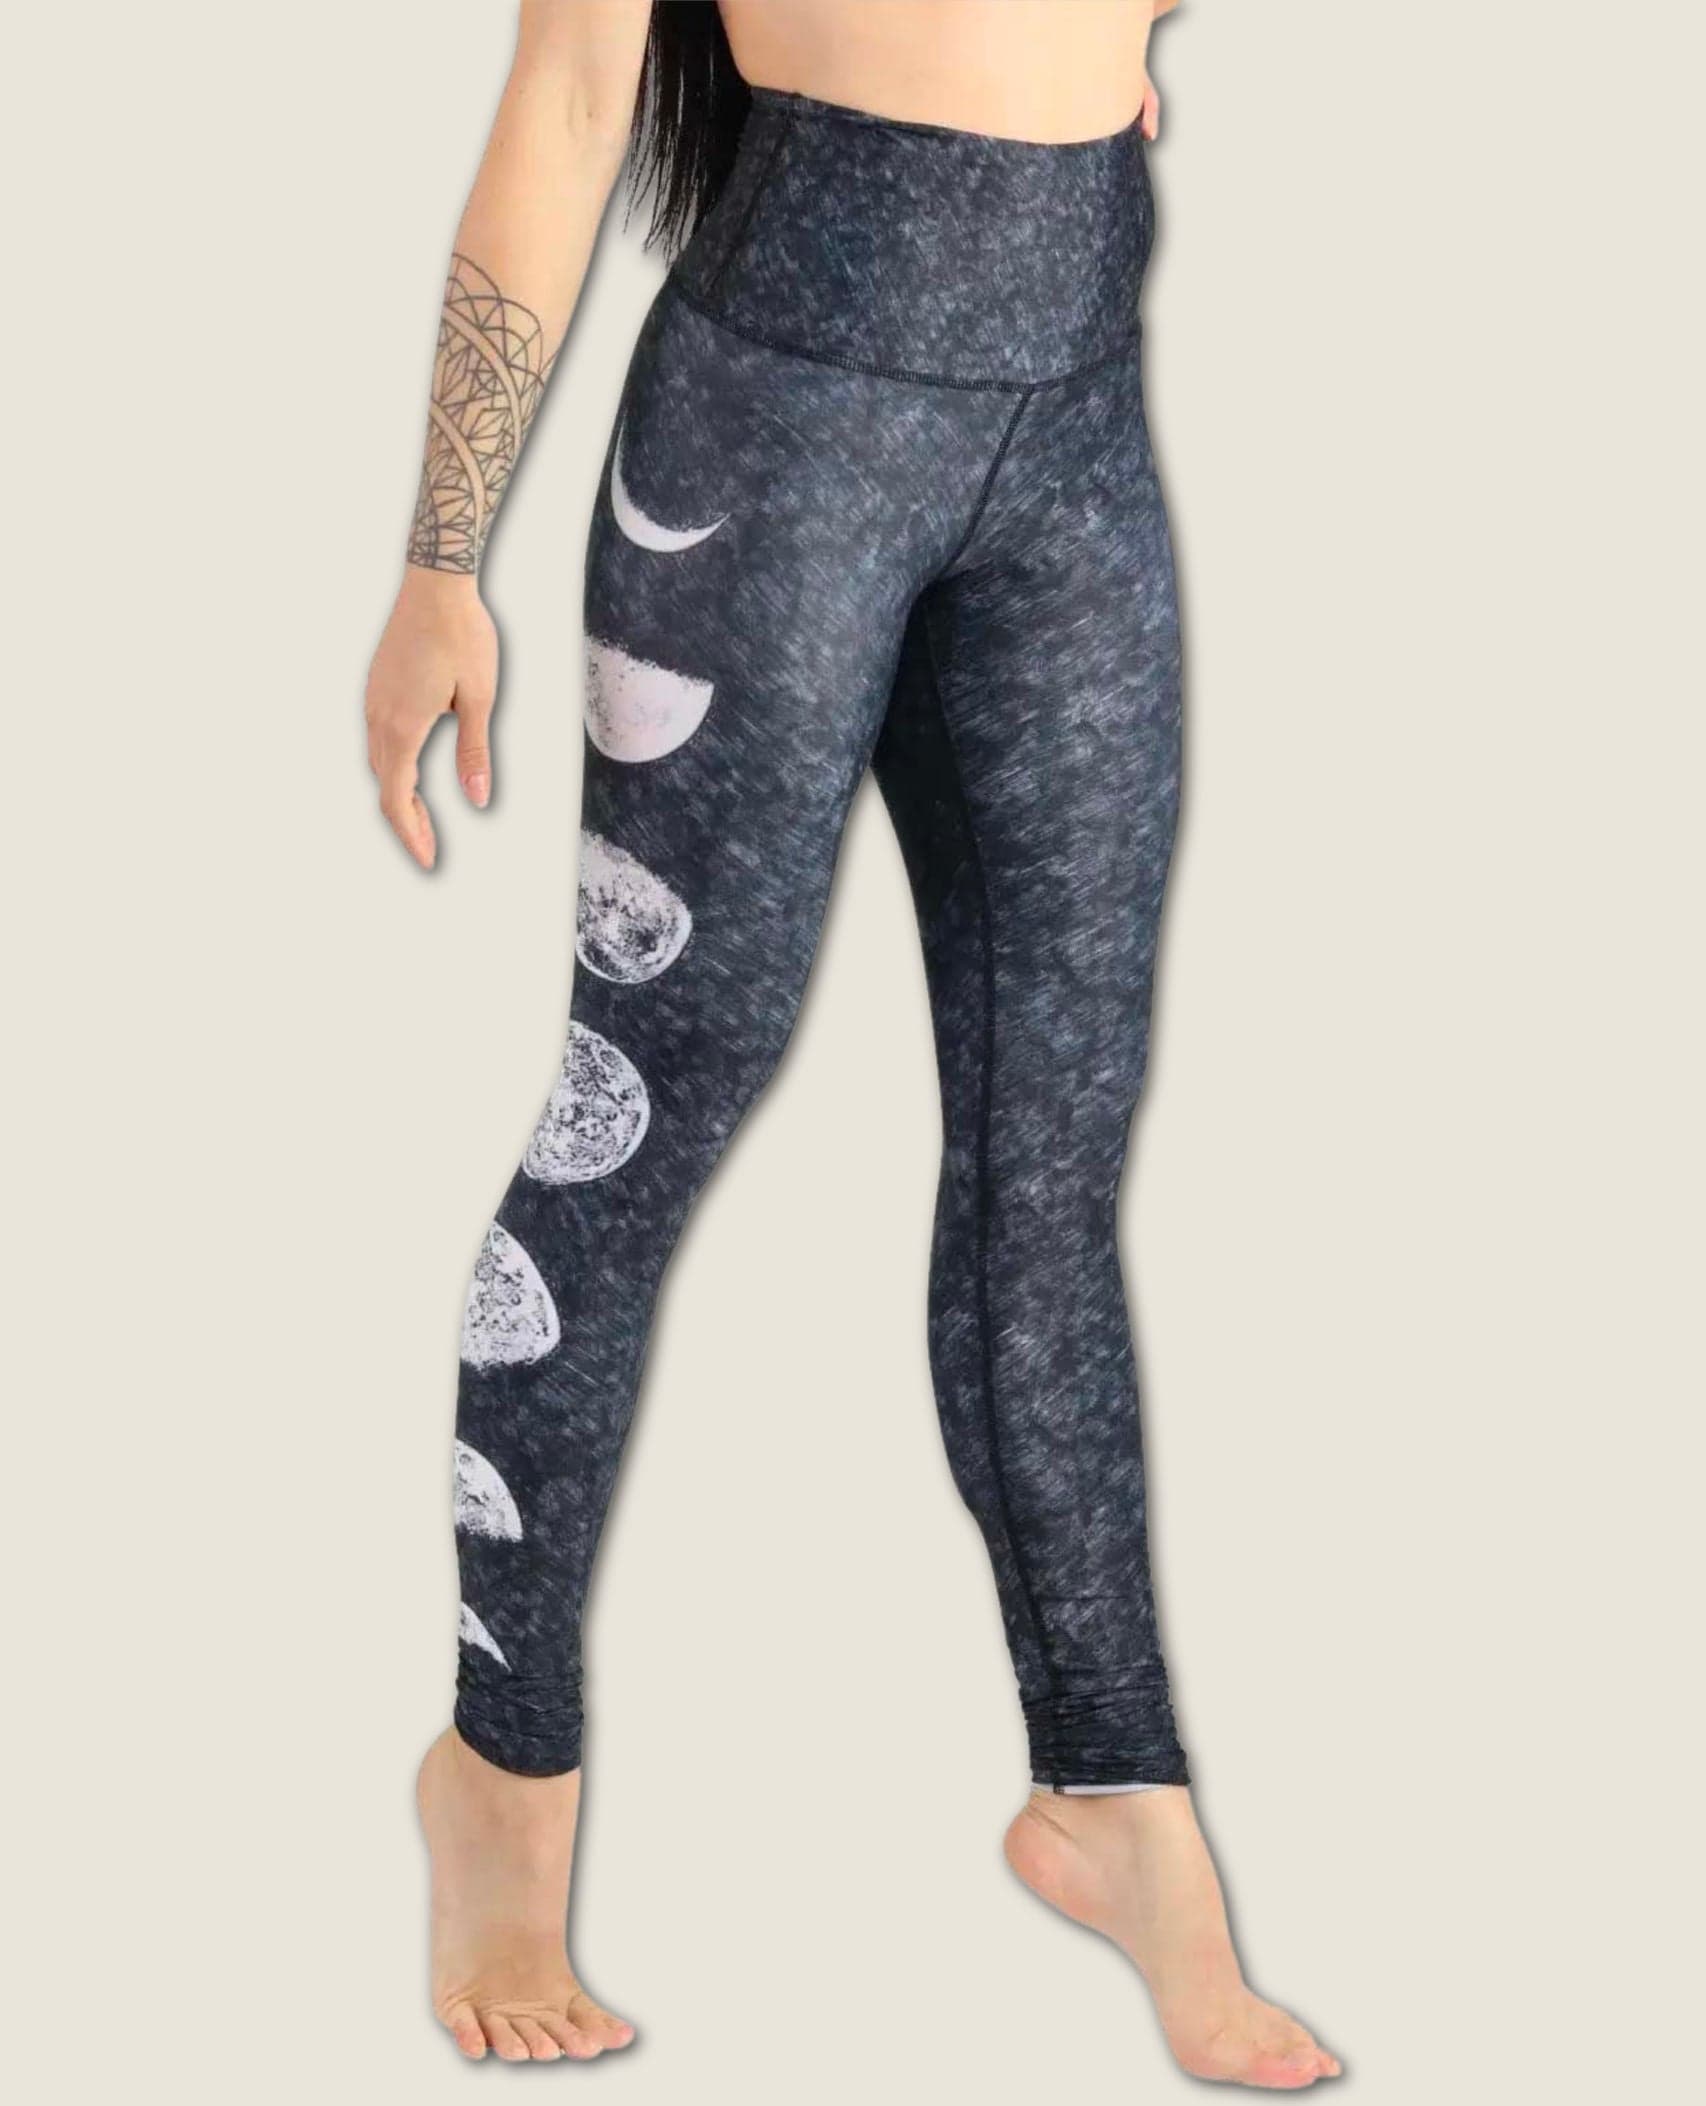 Just a Dark Moon Phase Printed Yoga Legging